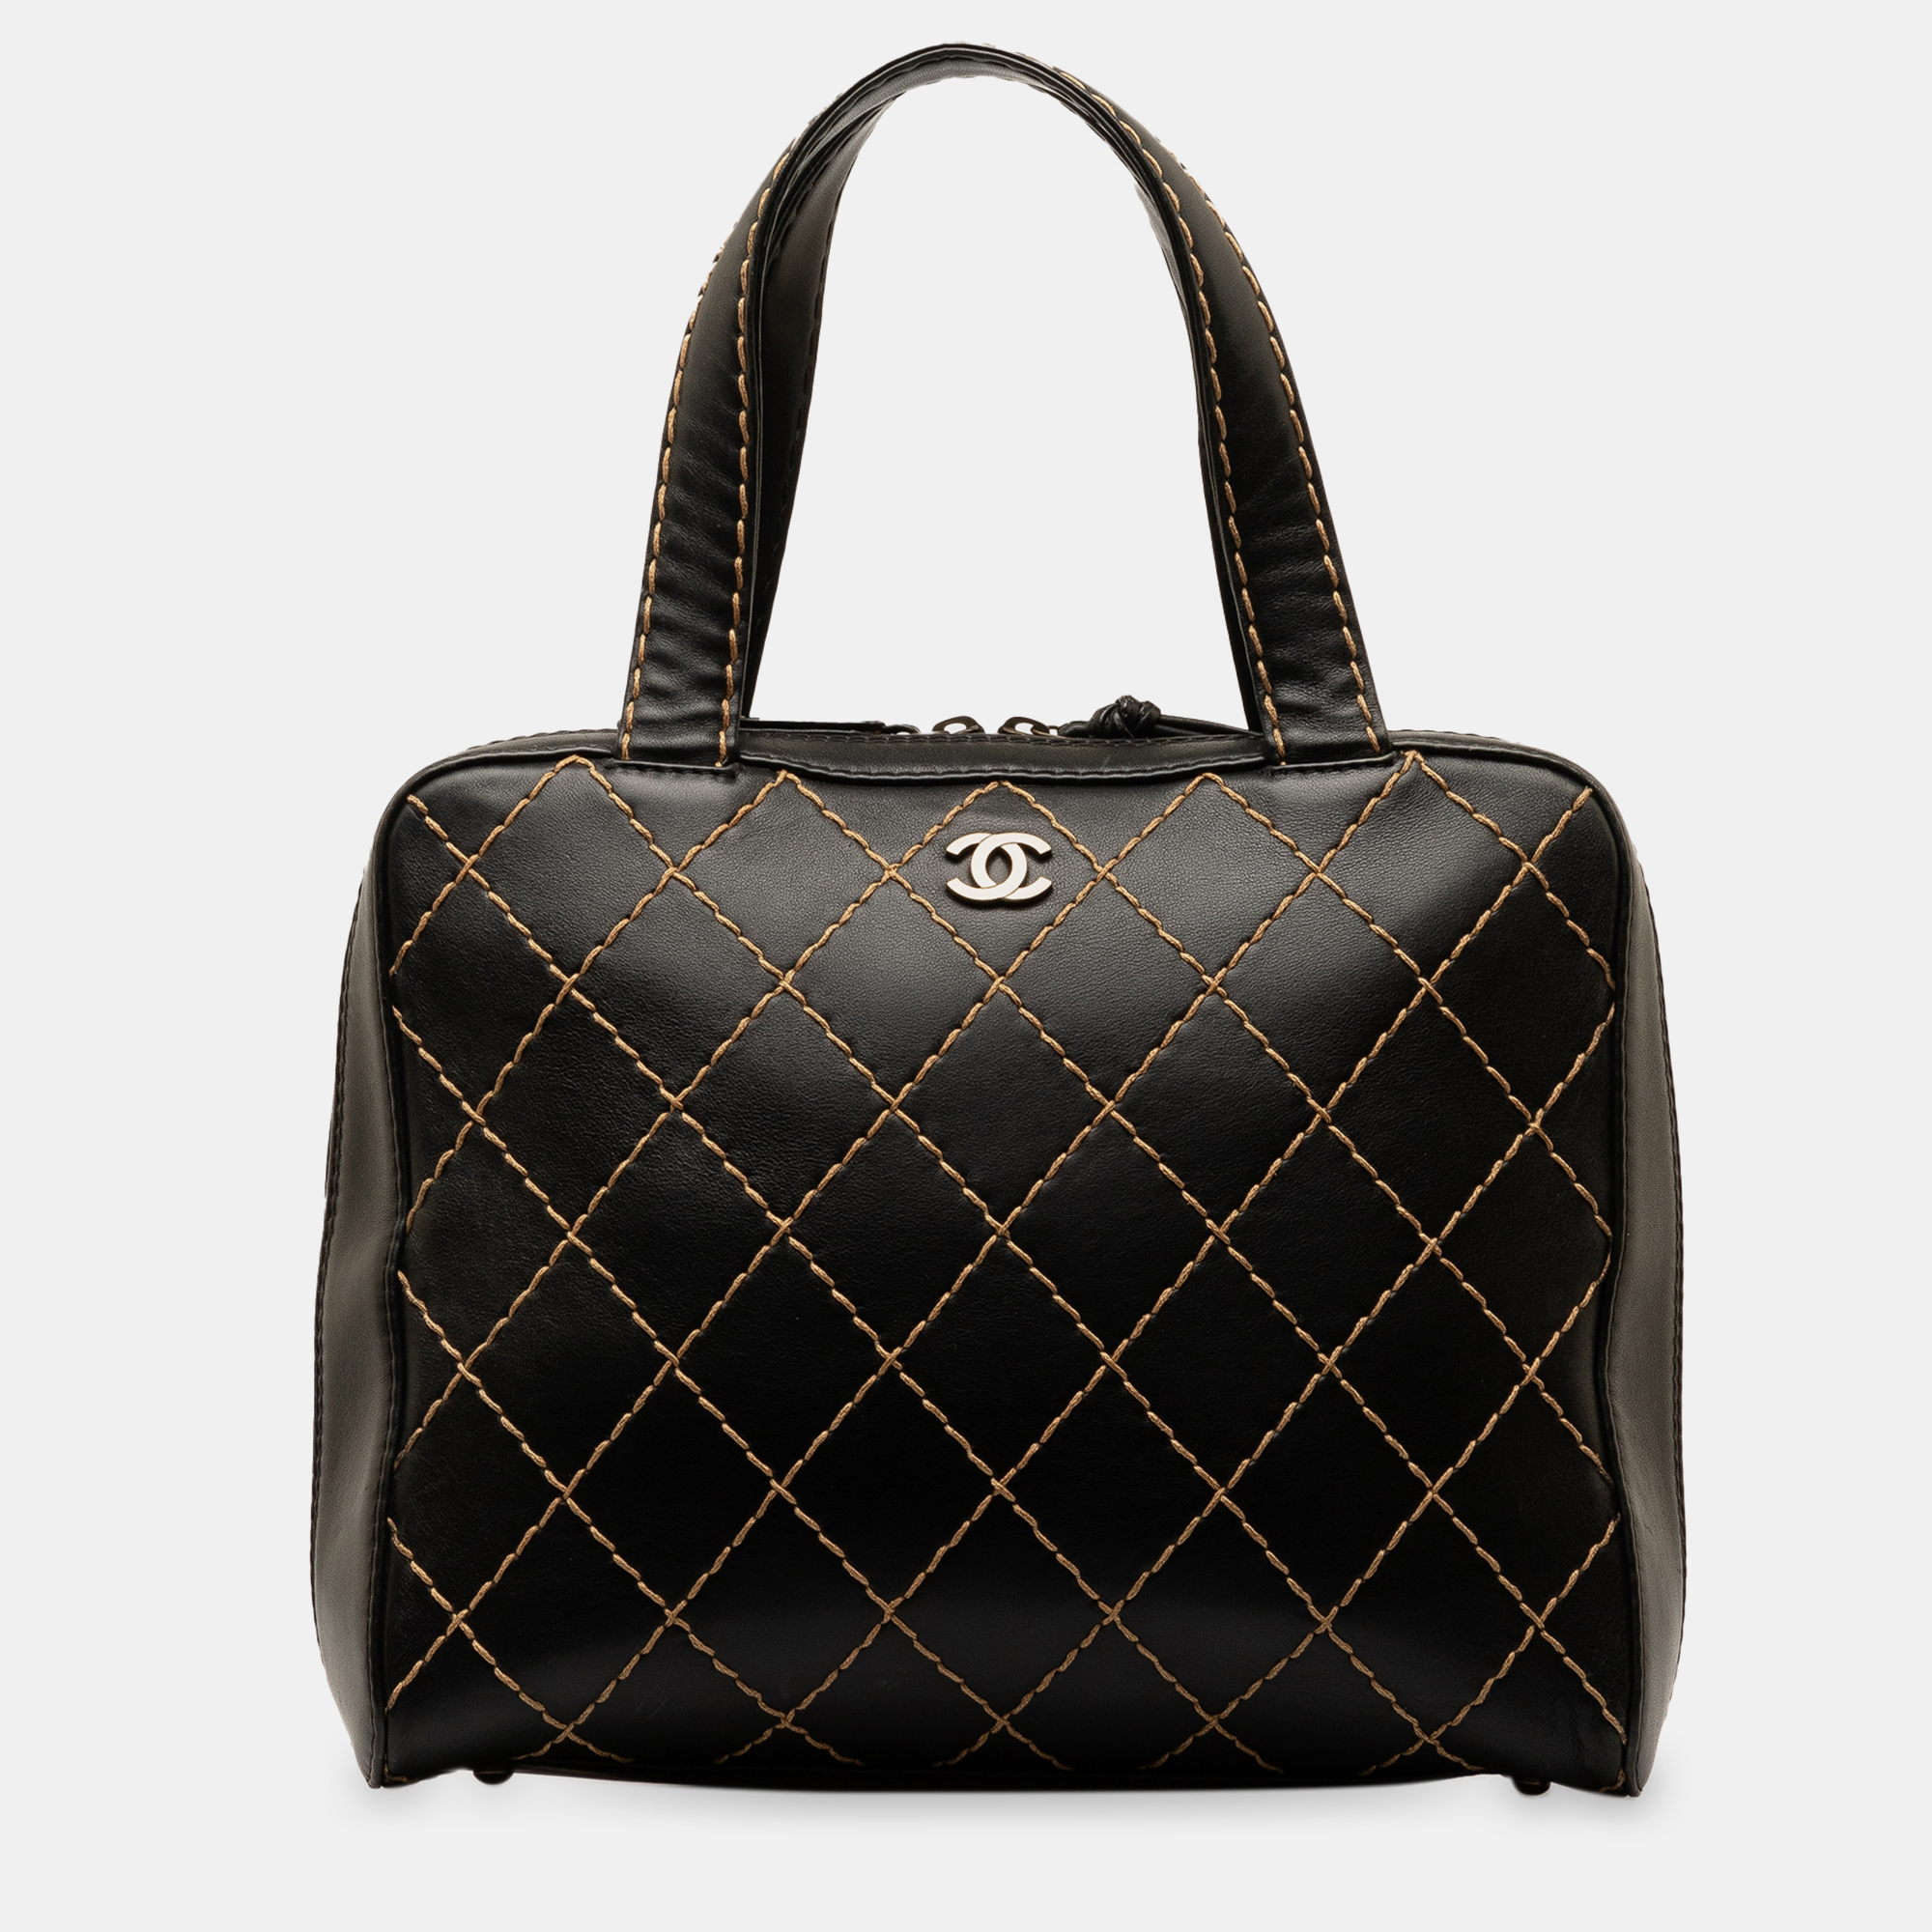 Chanel cc wild stitch handbag